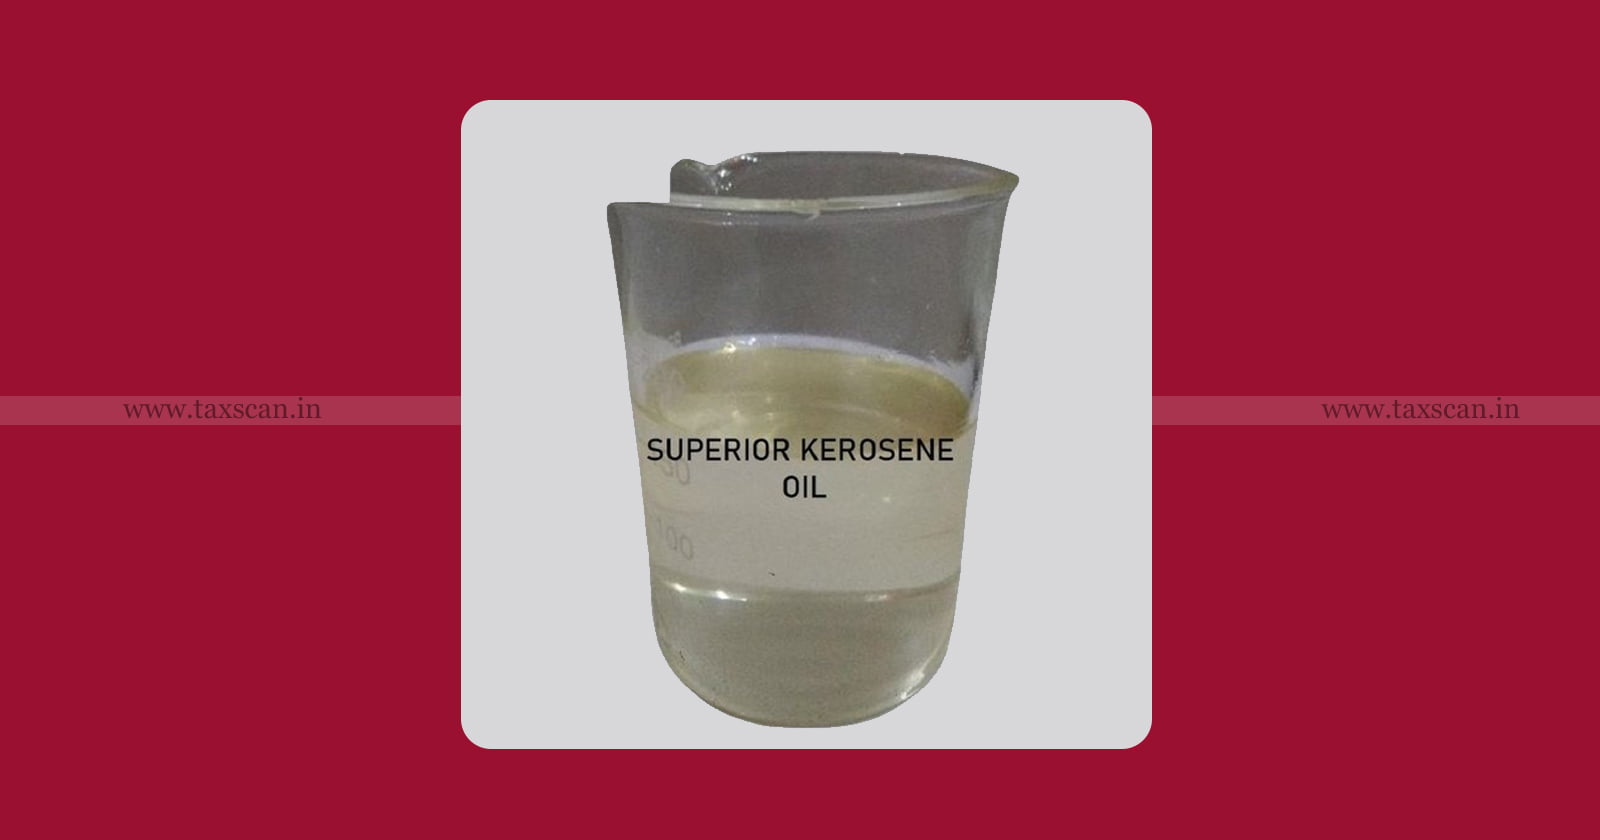 kerosene liquid